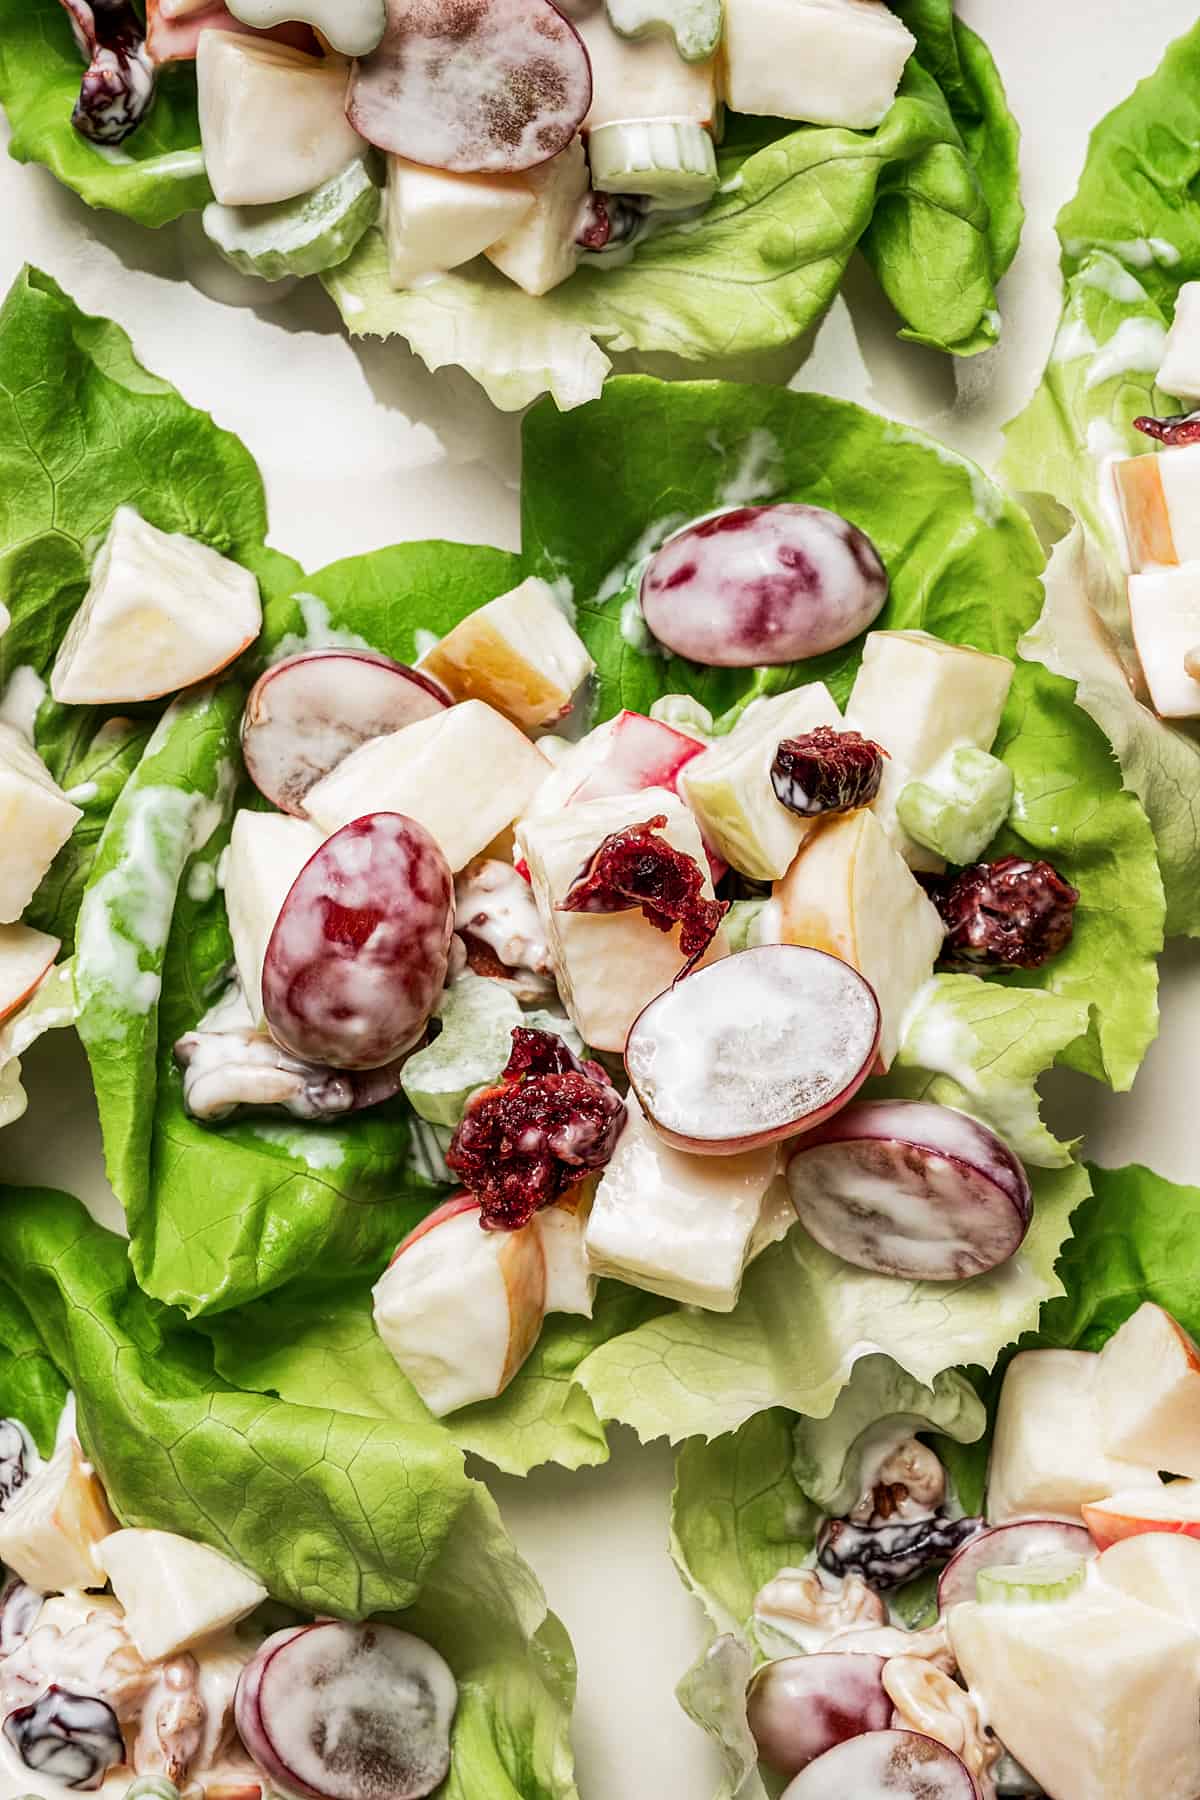 Fruit waldorf salad, arranged on lettuce leaves.